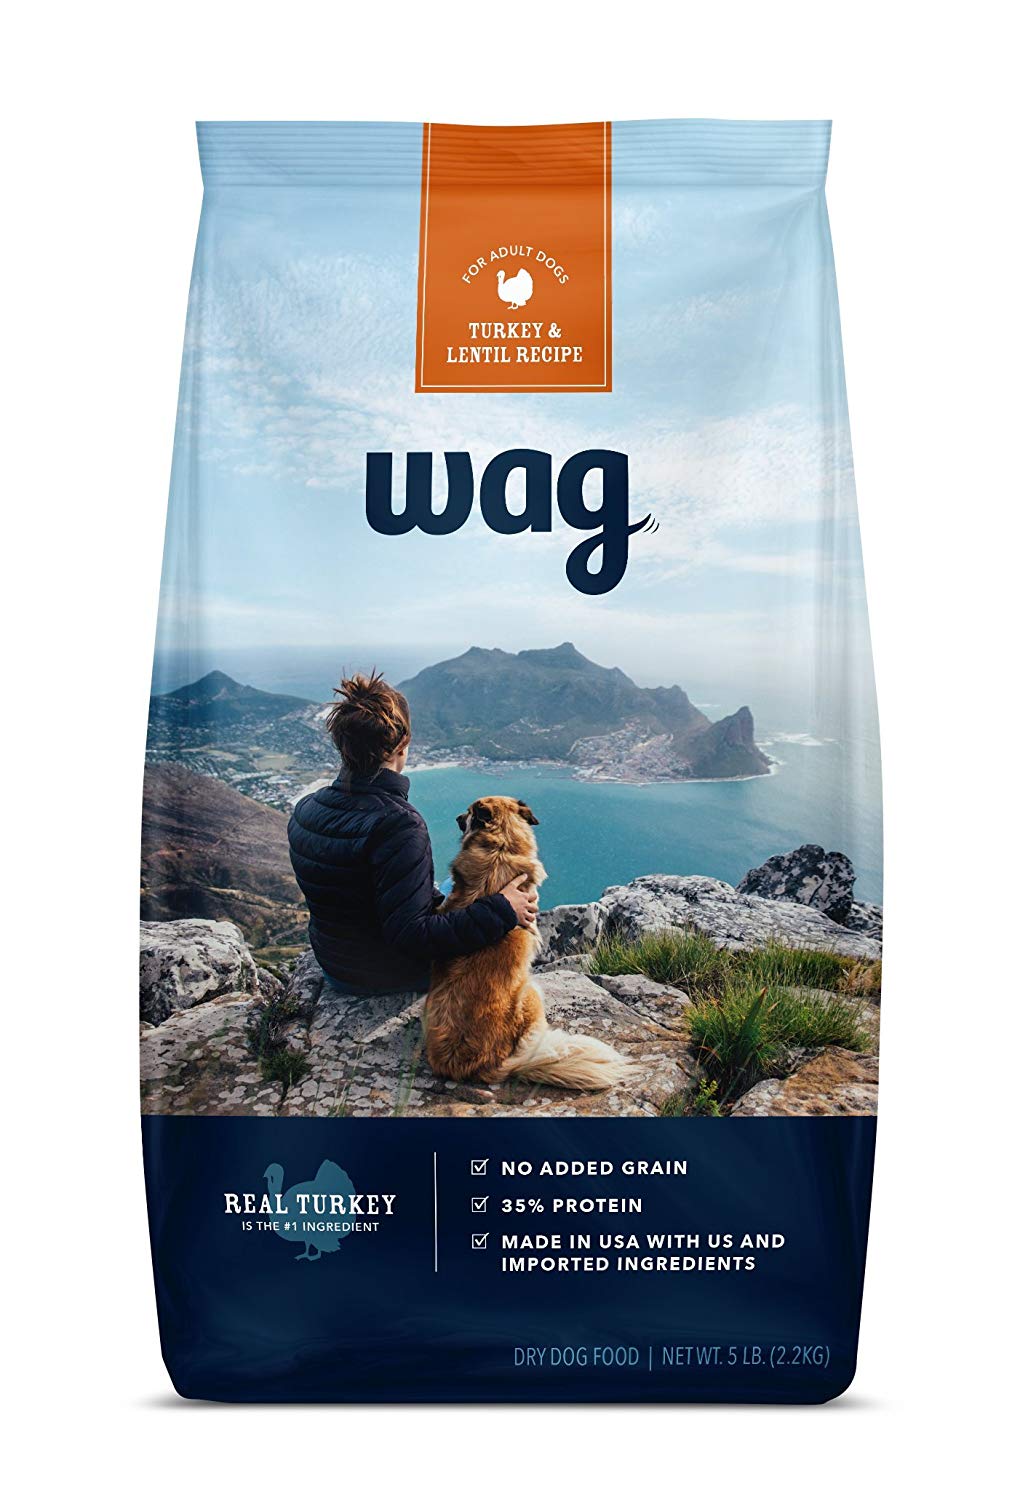 Wag Amazon Brand Dry Dog Food Coupons and Freebies Mom